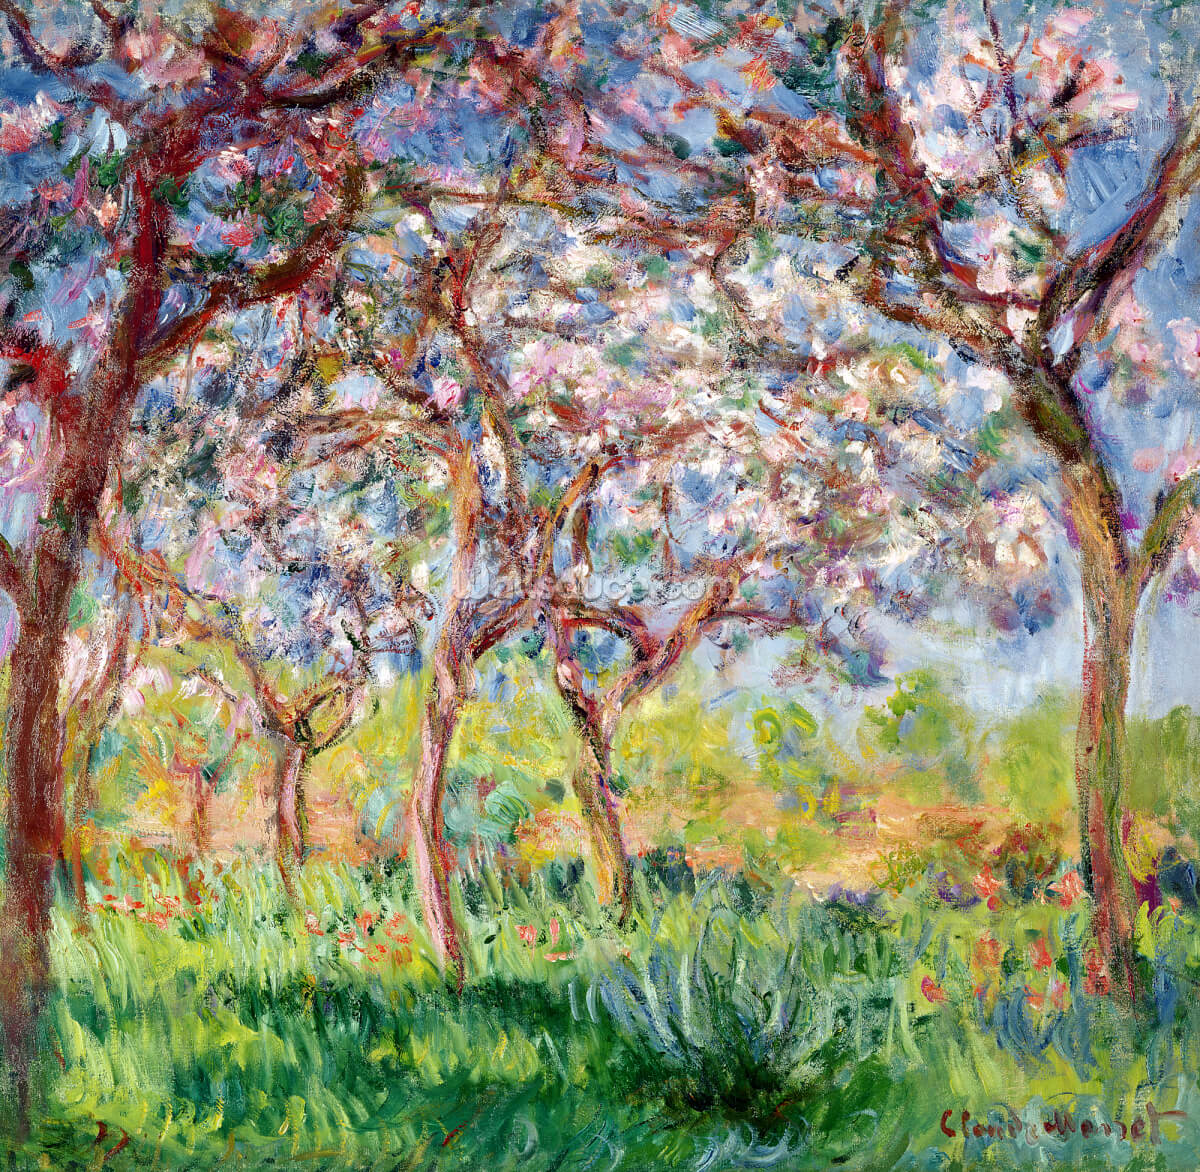 printemps-giverny-1903-olieverf-op-doek